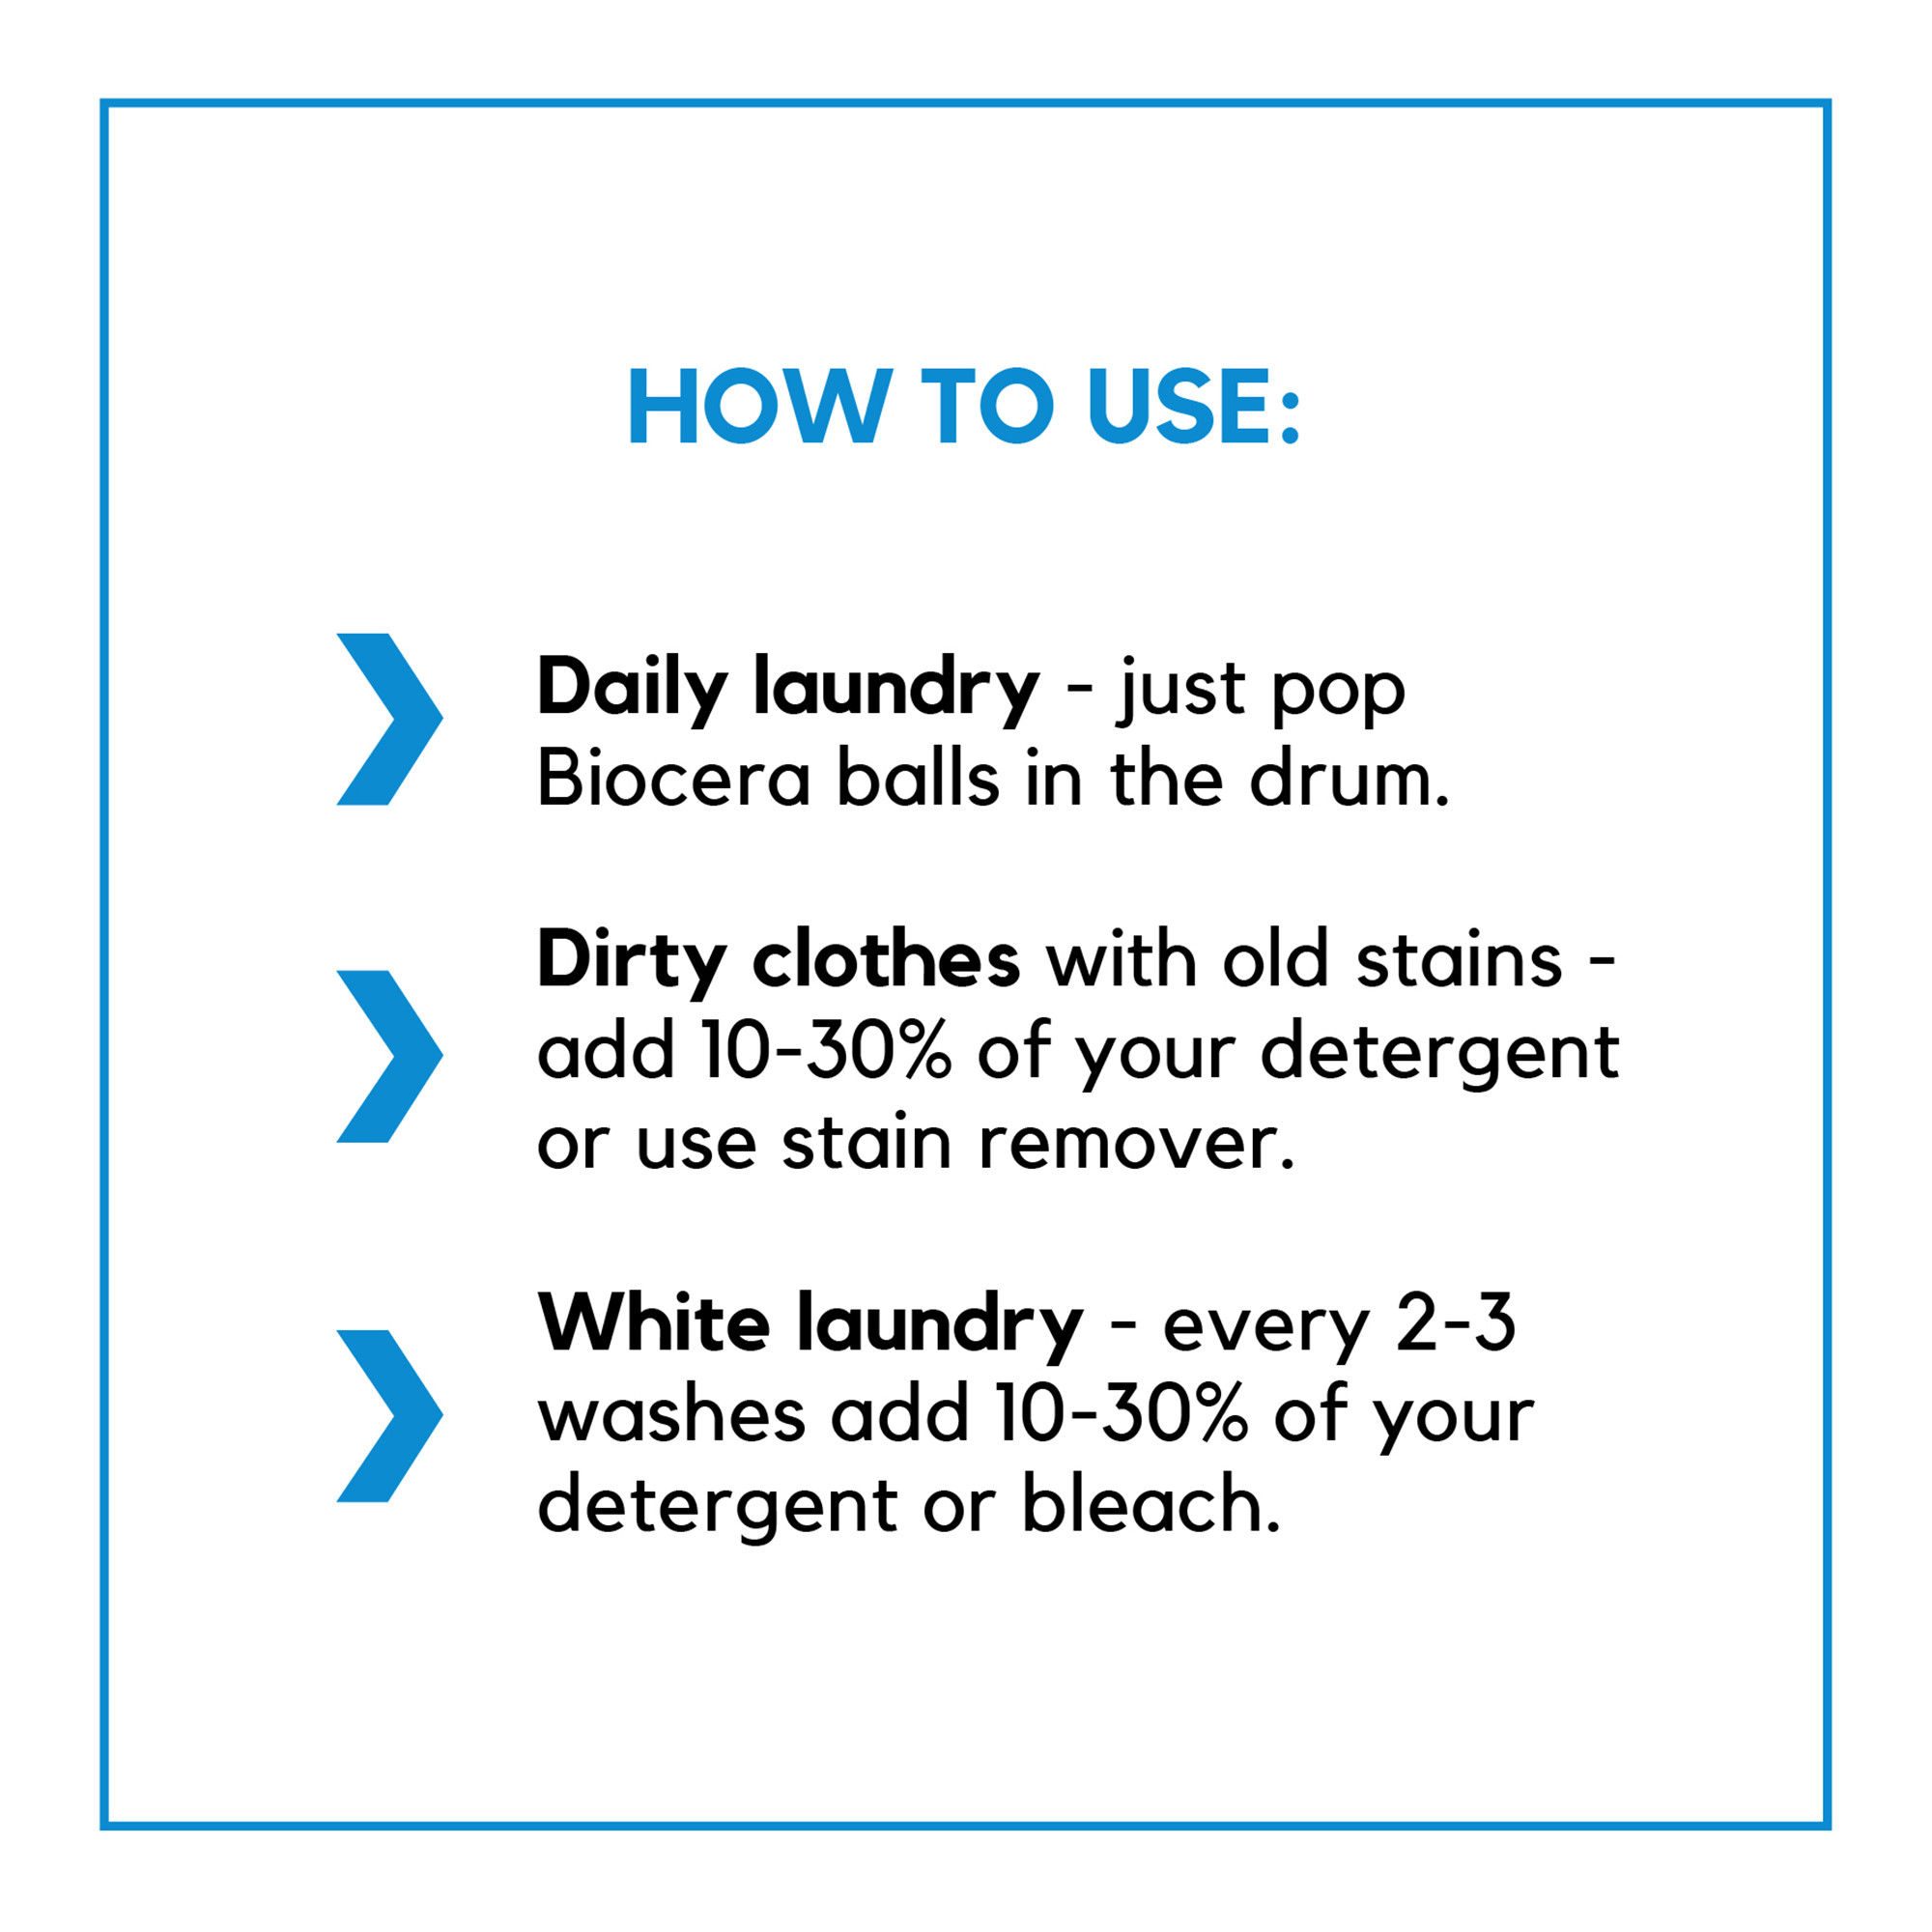 Biocera LAUNDRY BALLS &ndash; Make your laundry SAFE and GREEN.1100 washes, 3 years of daily eco laundry experience. No phosphates, parabens, SLS/SLES.